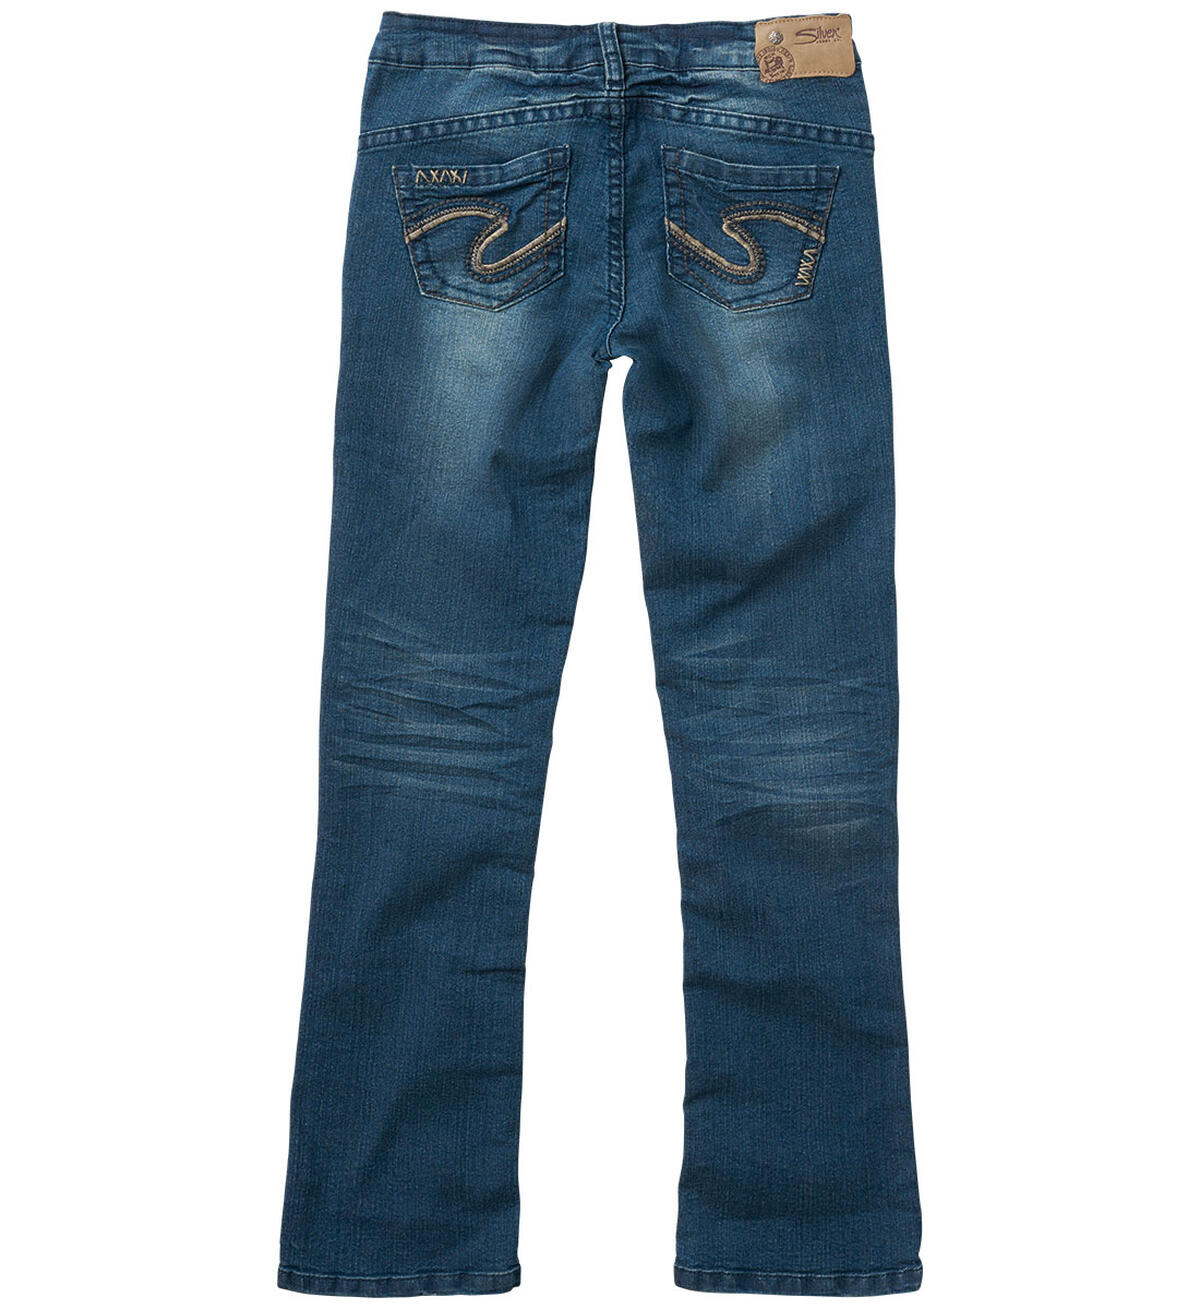 Tammy Bootcut Jeans in Dark Wash (4-7), , hi-res image number 1